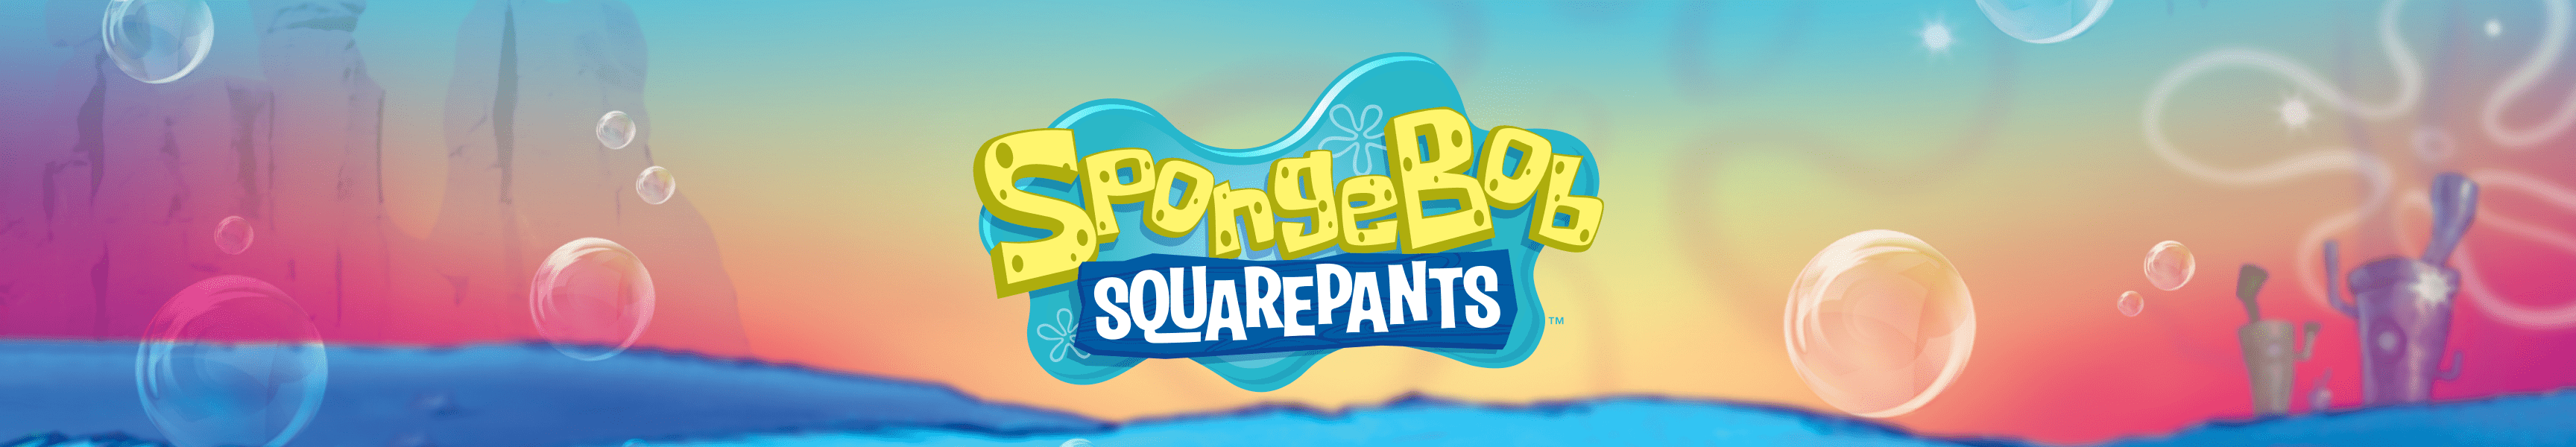 SpongeBob SquarePants $20 and Under!